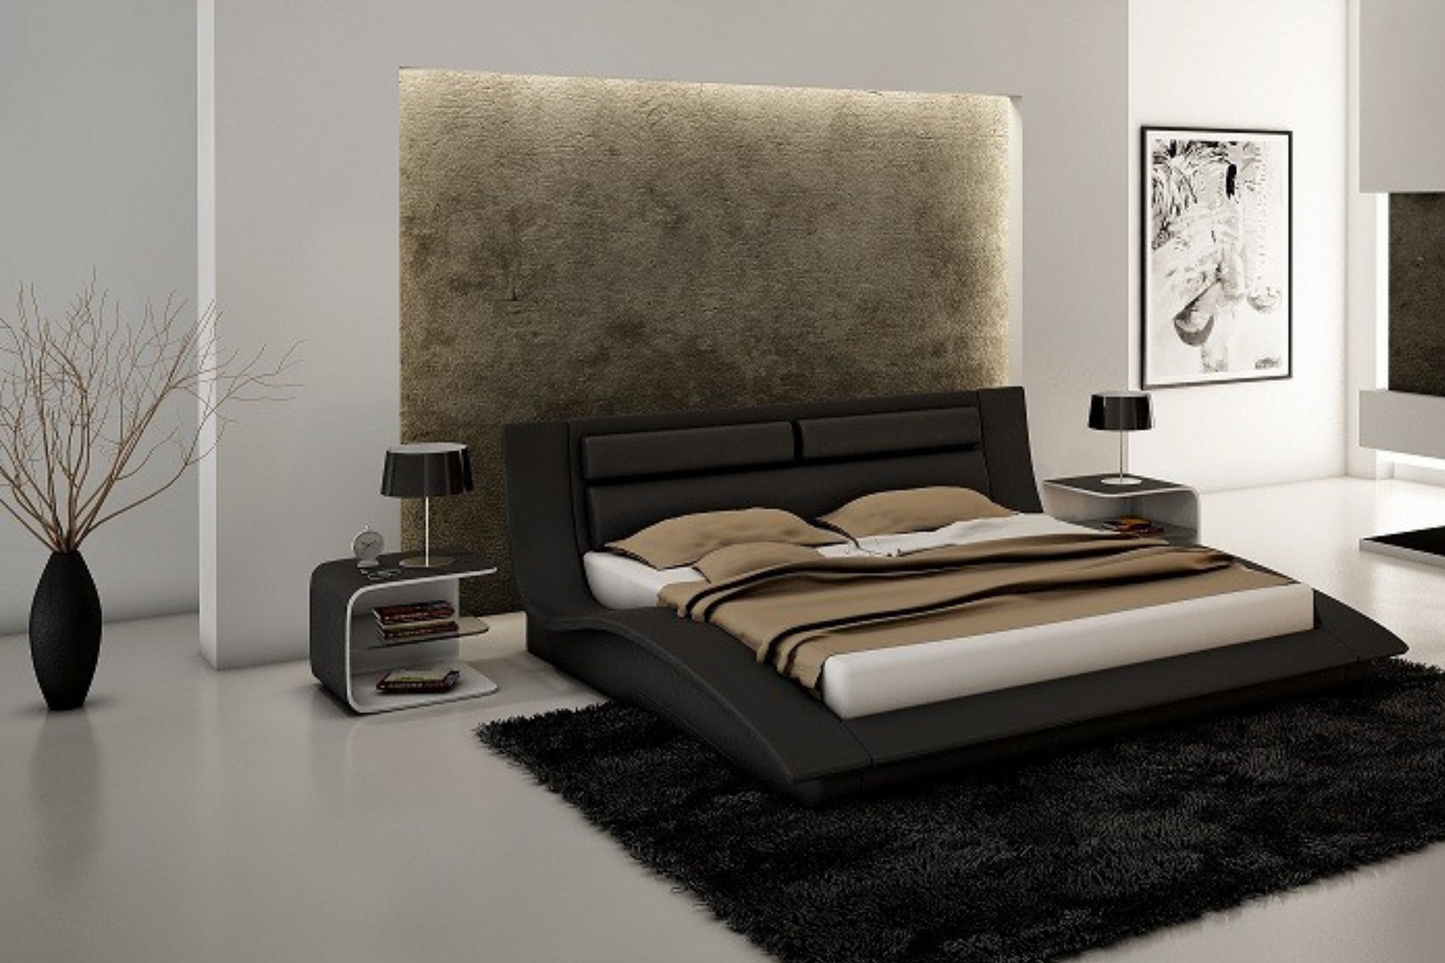 Wave Bedroom Bed in Black SKU: 17836